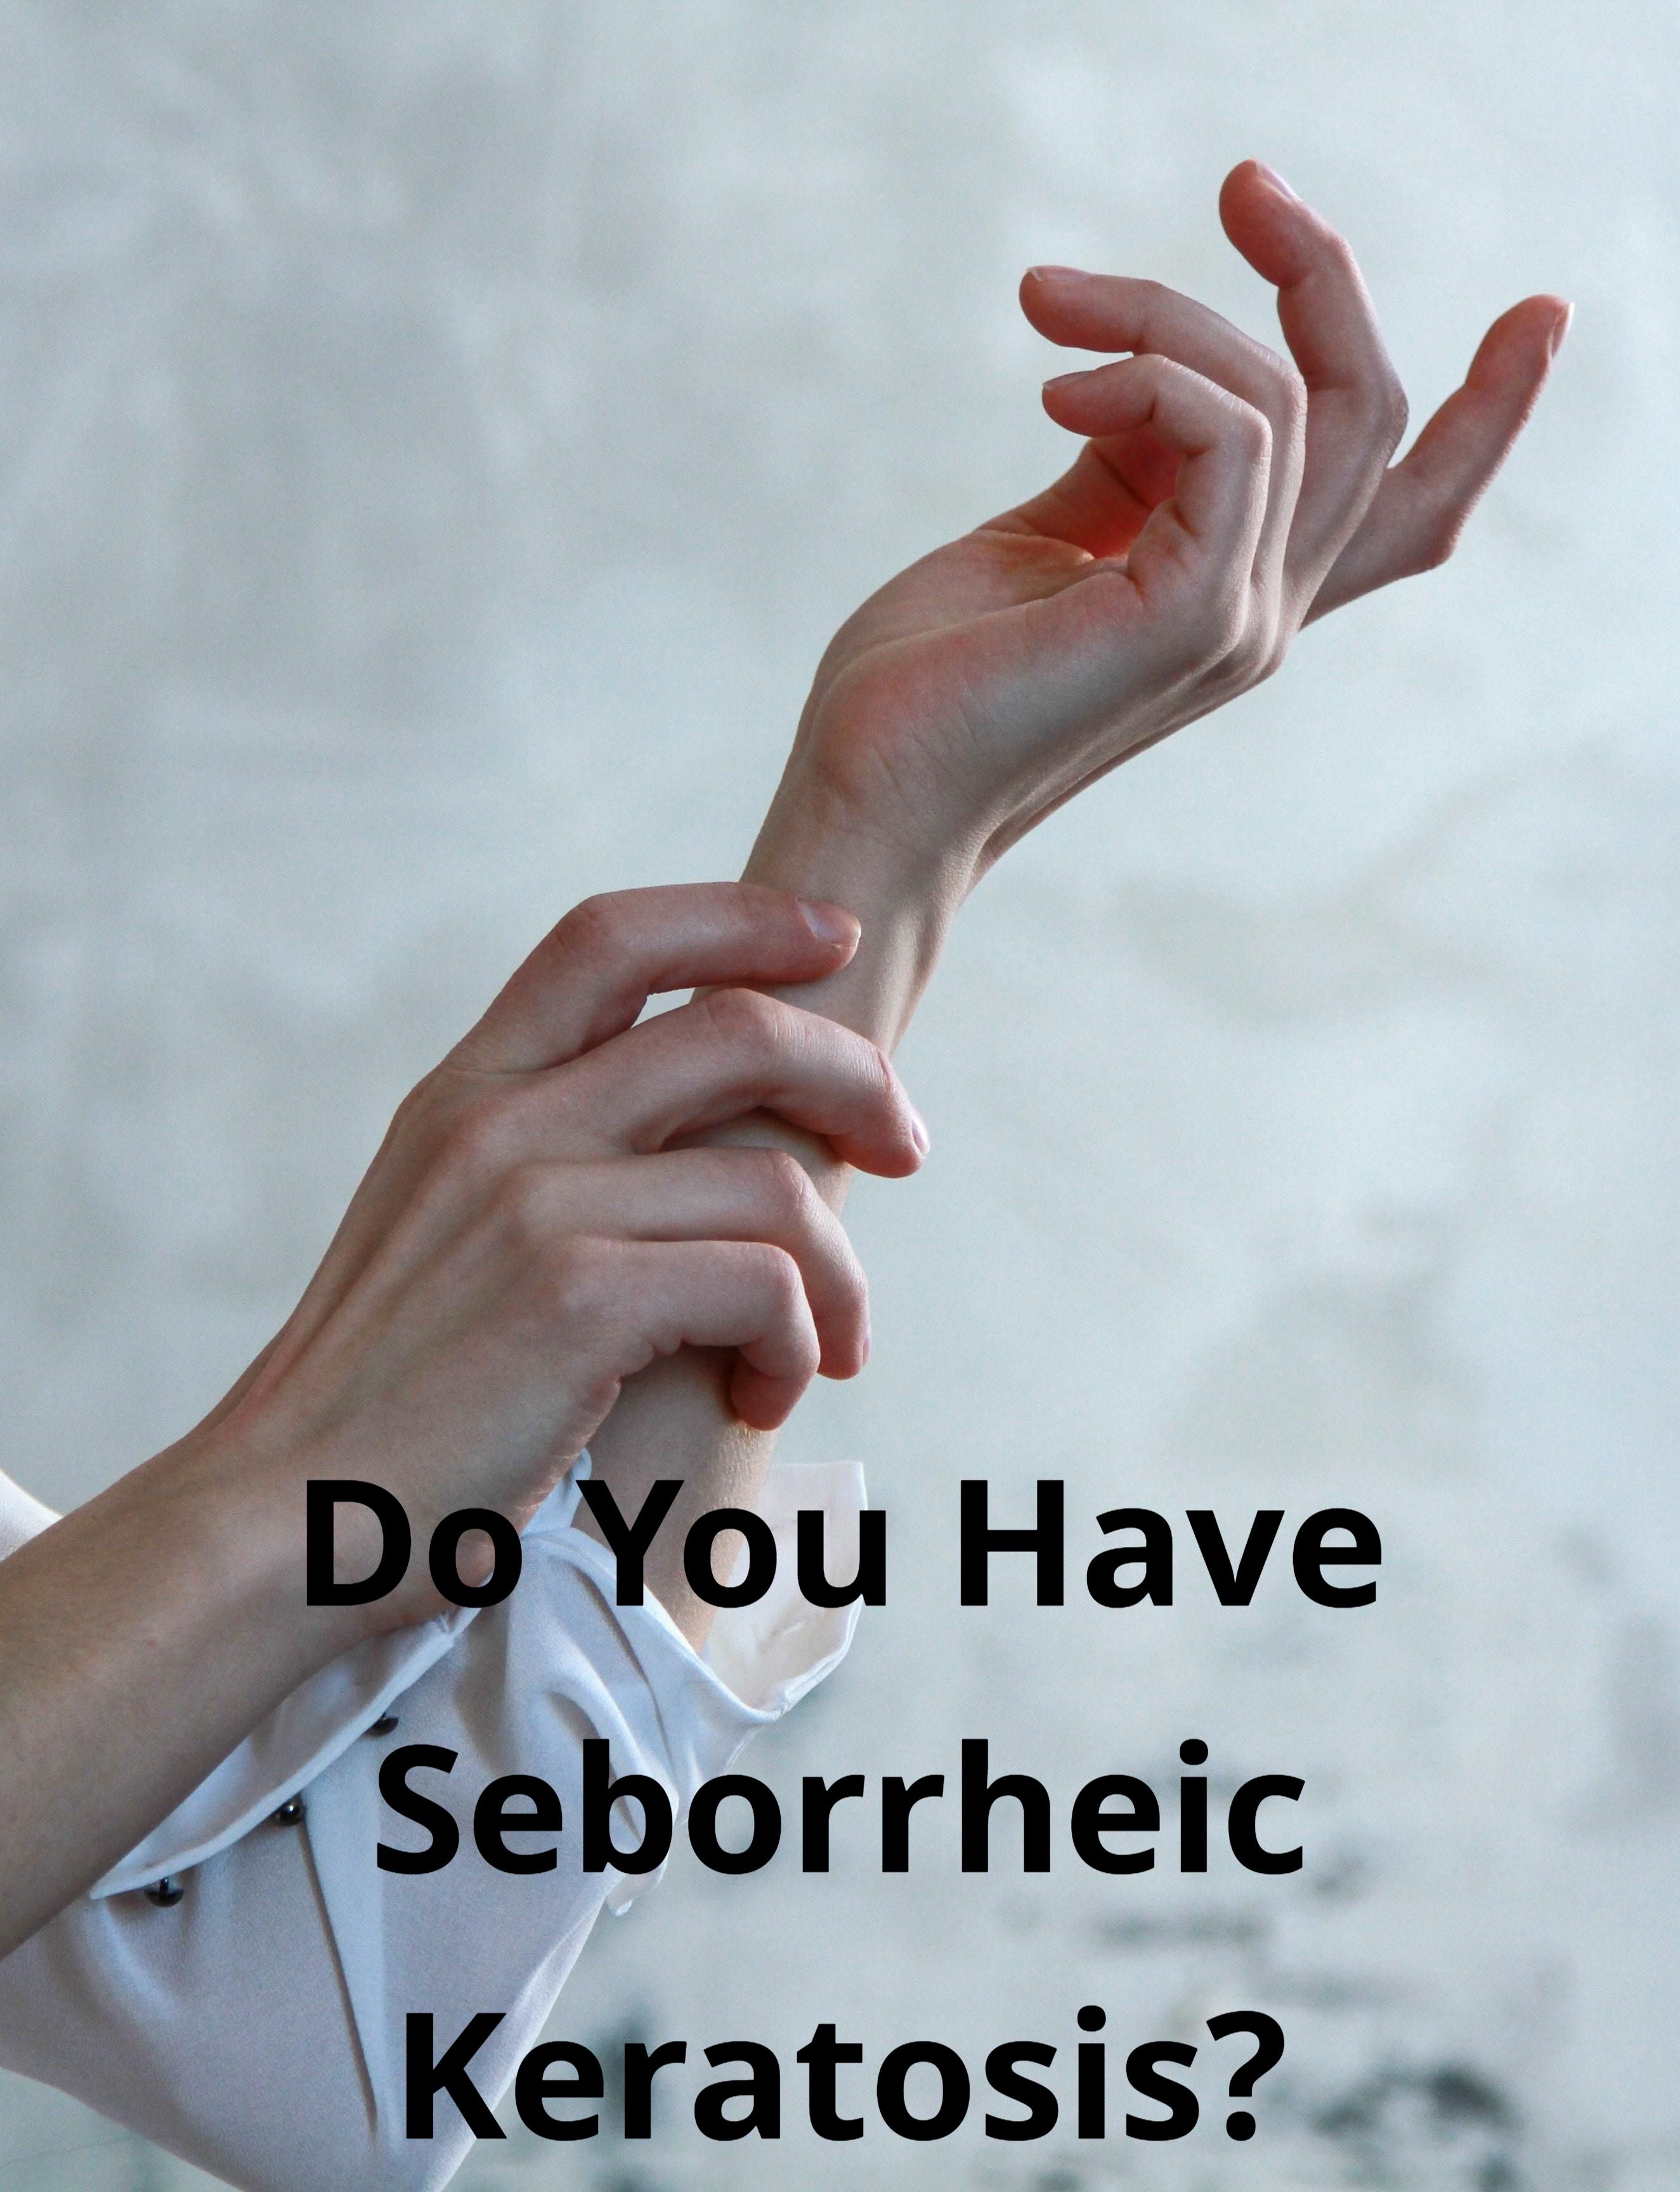 Do You Have Seborrheic Keratosis?